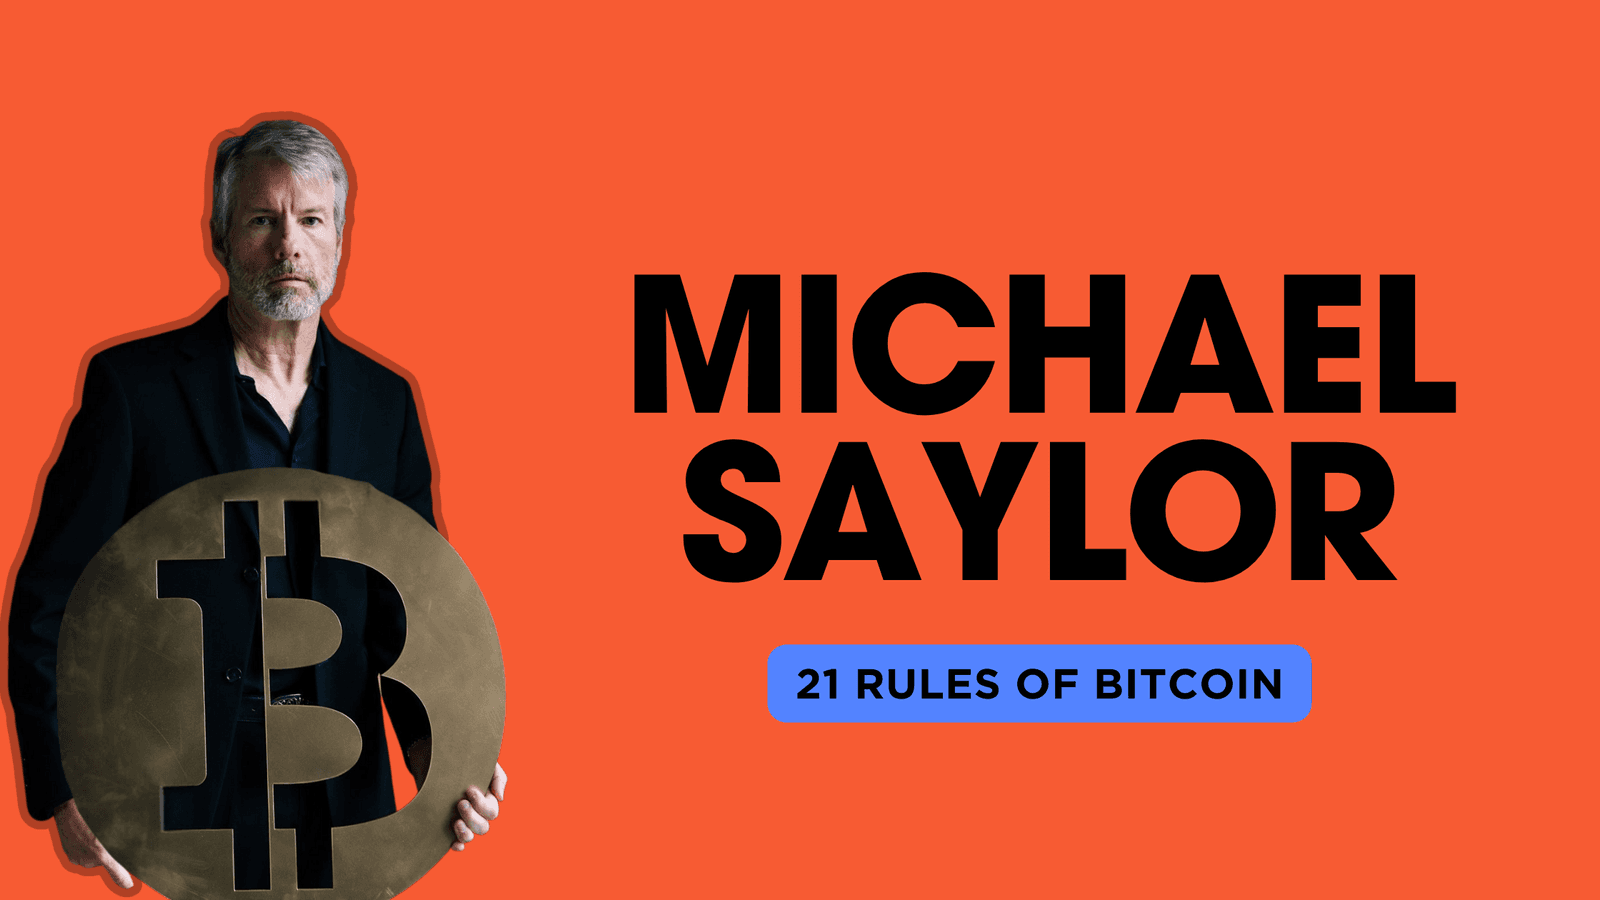 Michael Saylor&#8217;s &#8220;21 Rules Of Bitcoin&#8221; image